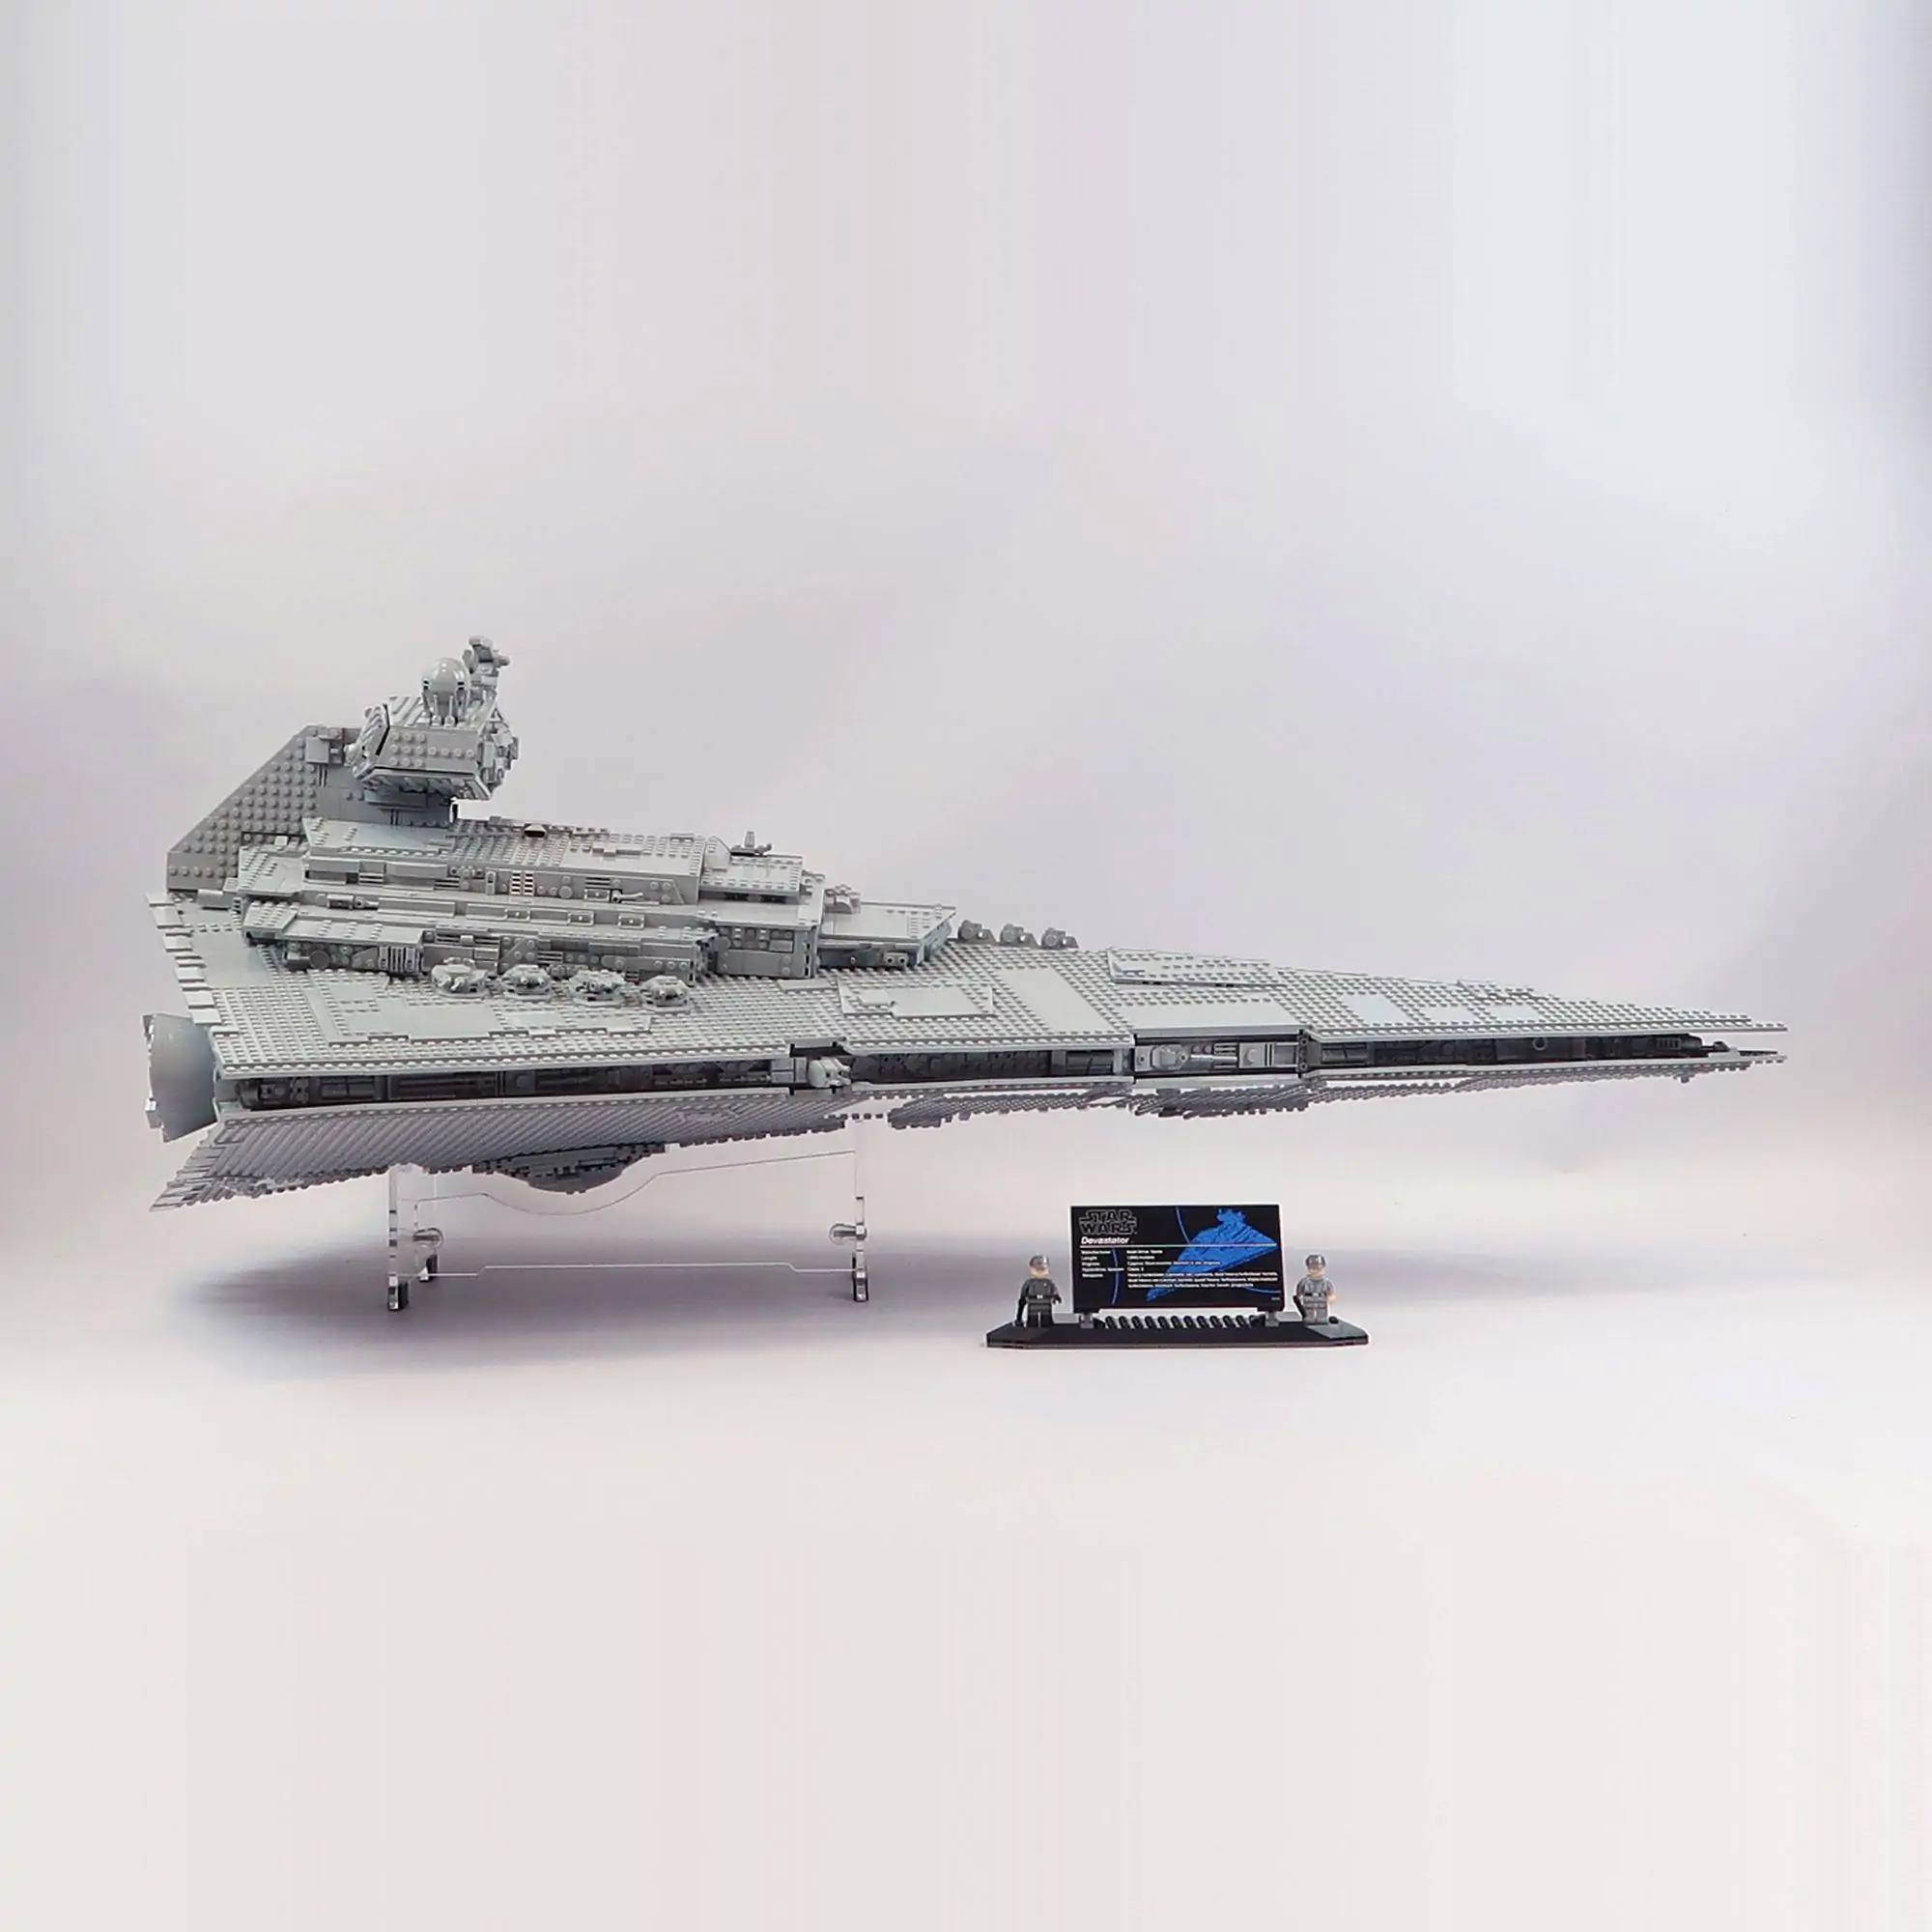 LEGO Star Wars UCS Imperial Star Destroyer • Set 75252